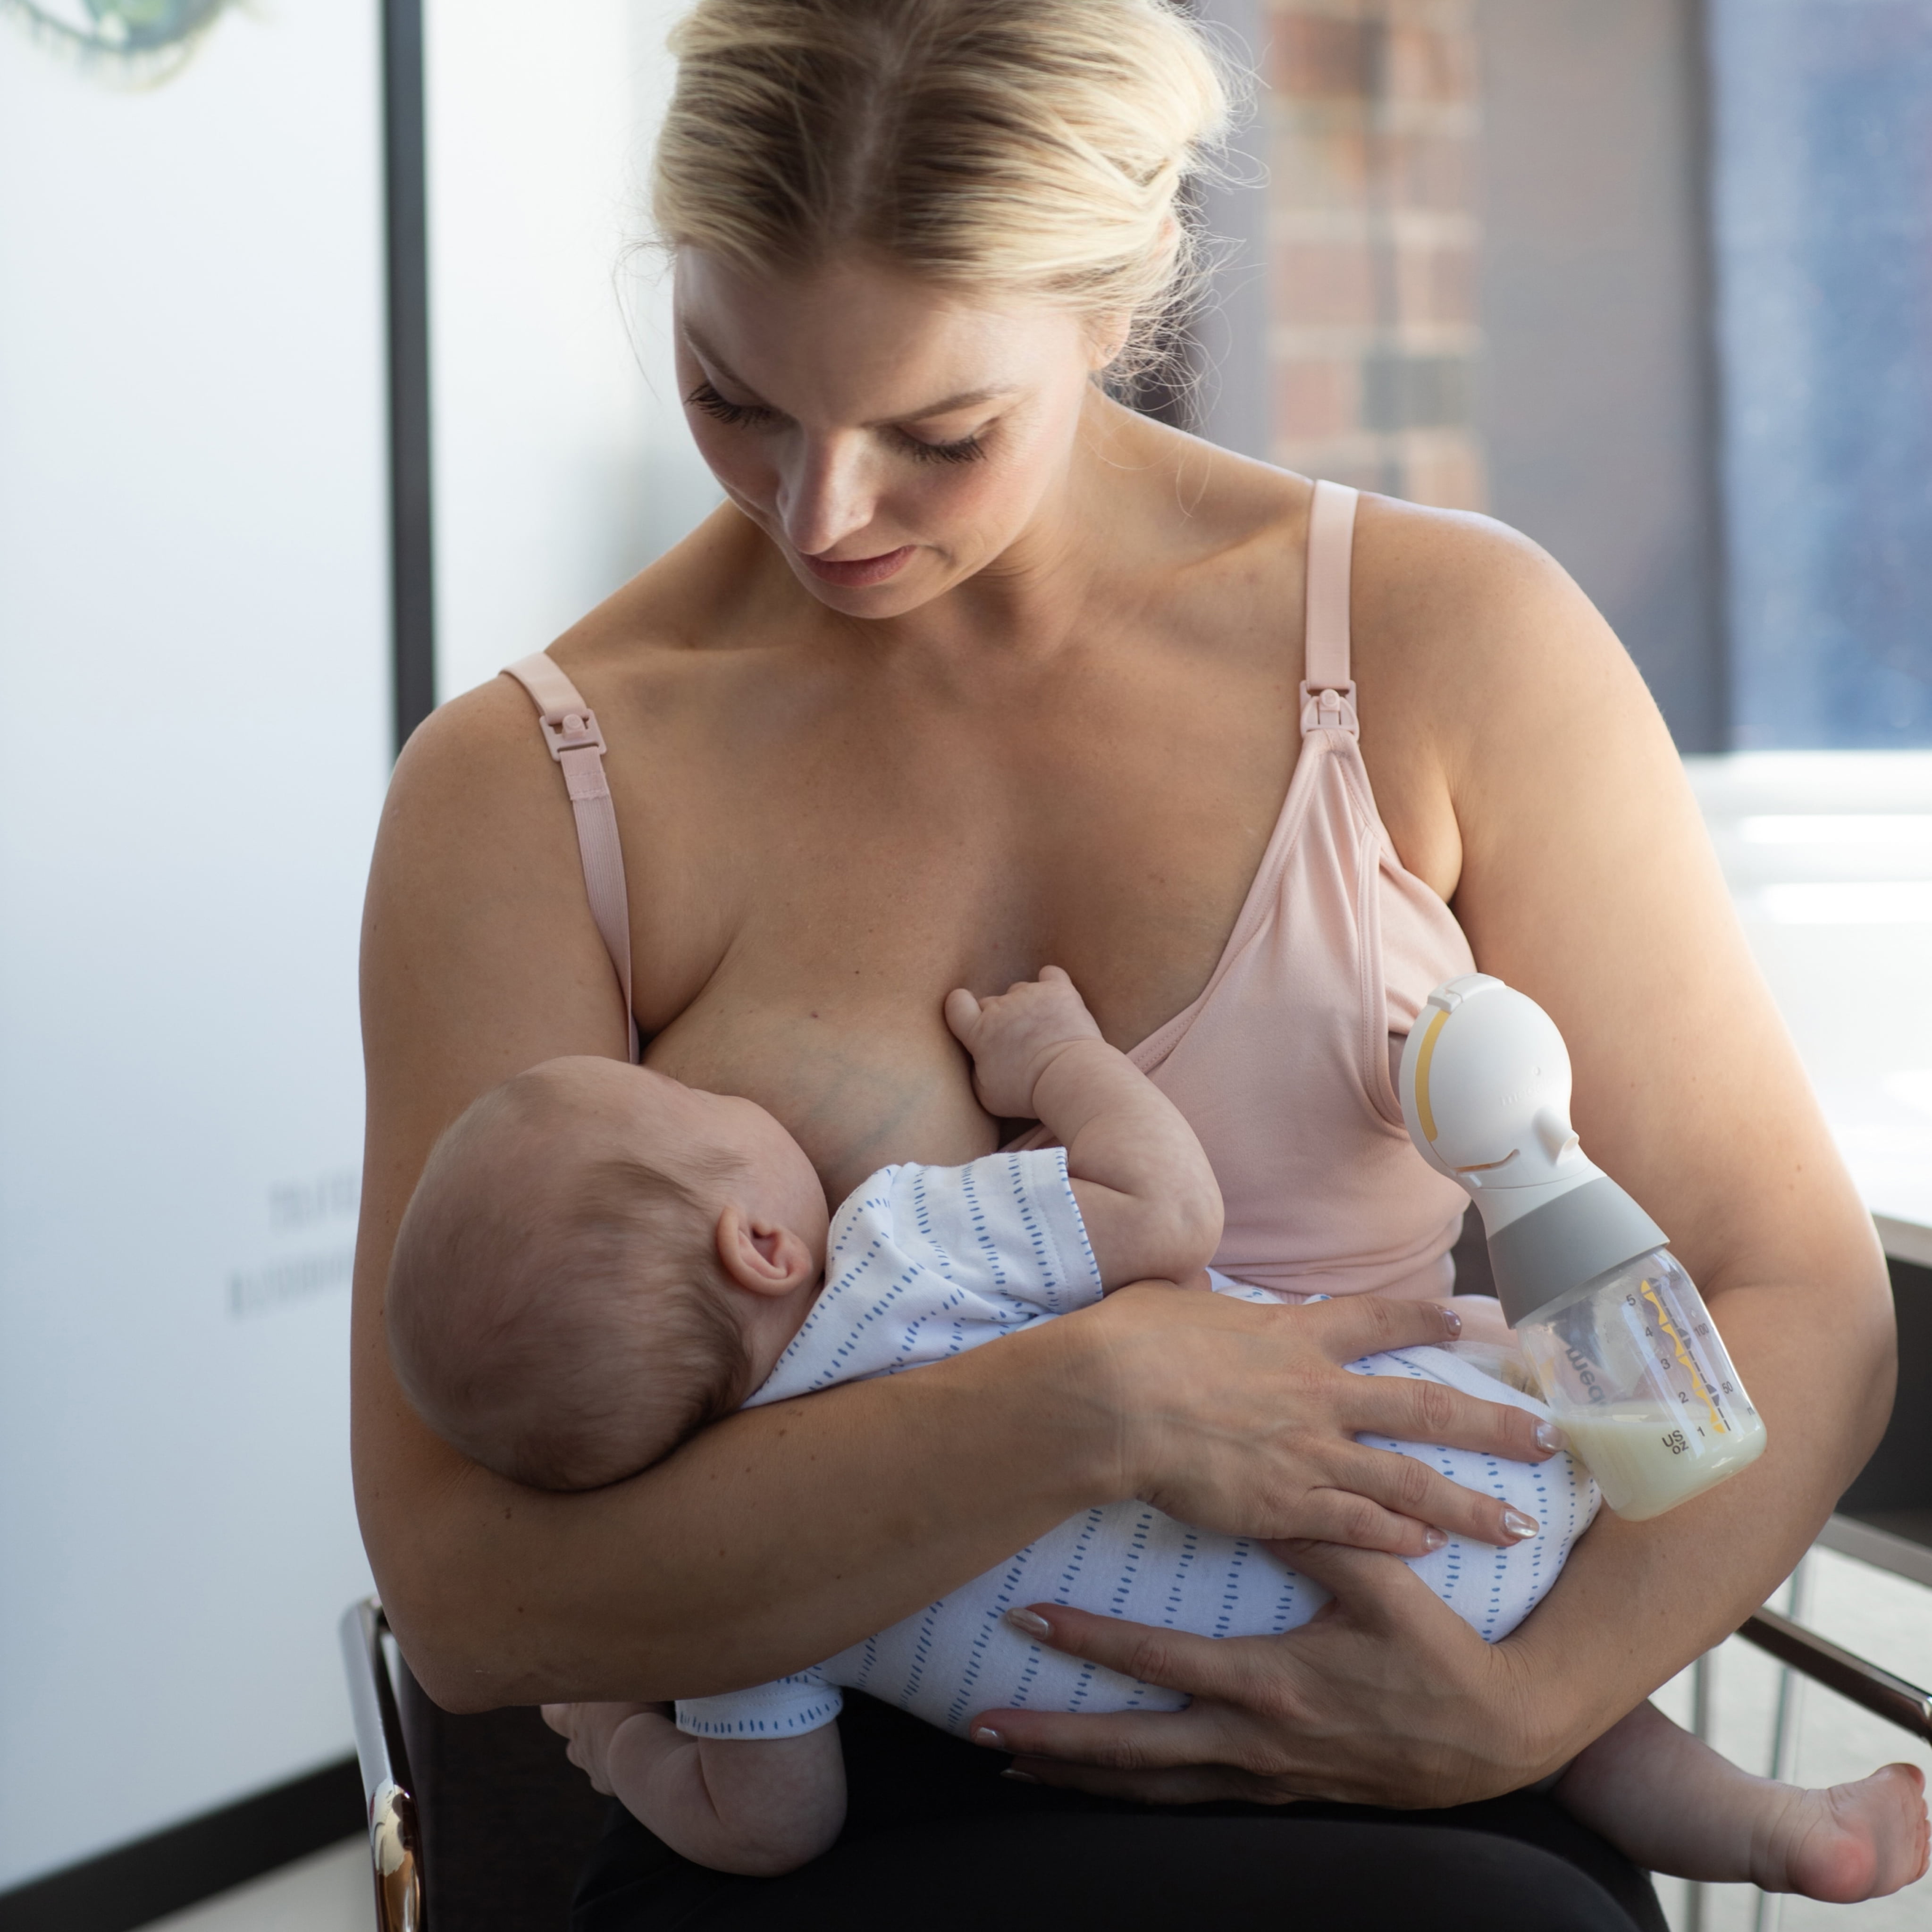 Bravado Original Pumping & Nursing Bra – Healthy Horizons Breastfeeding  Centers, Inc.